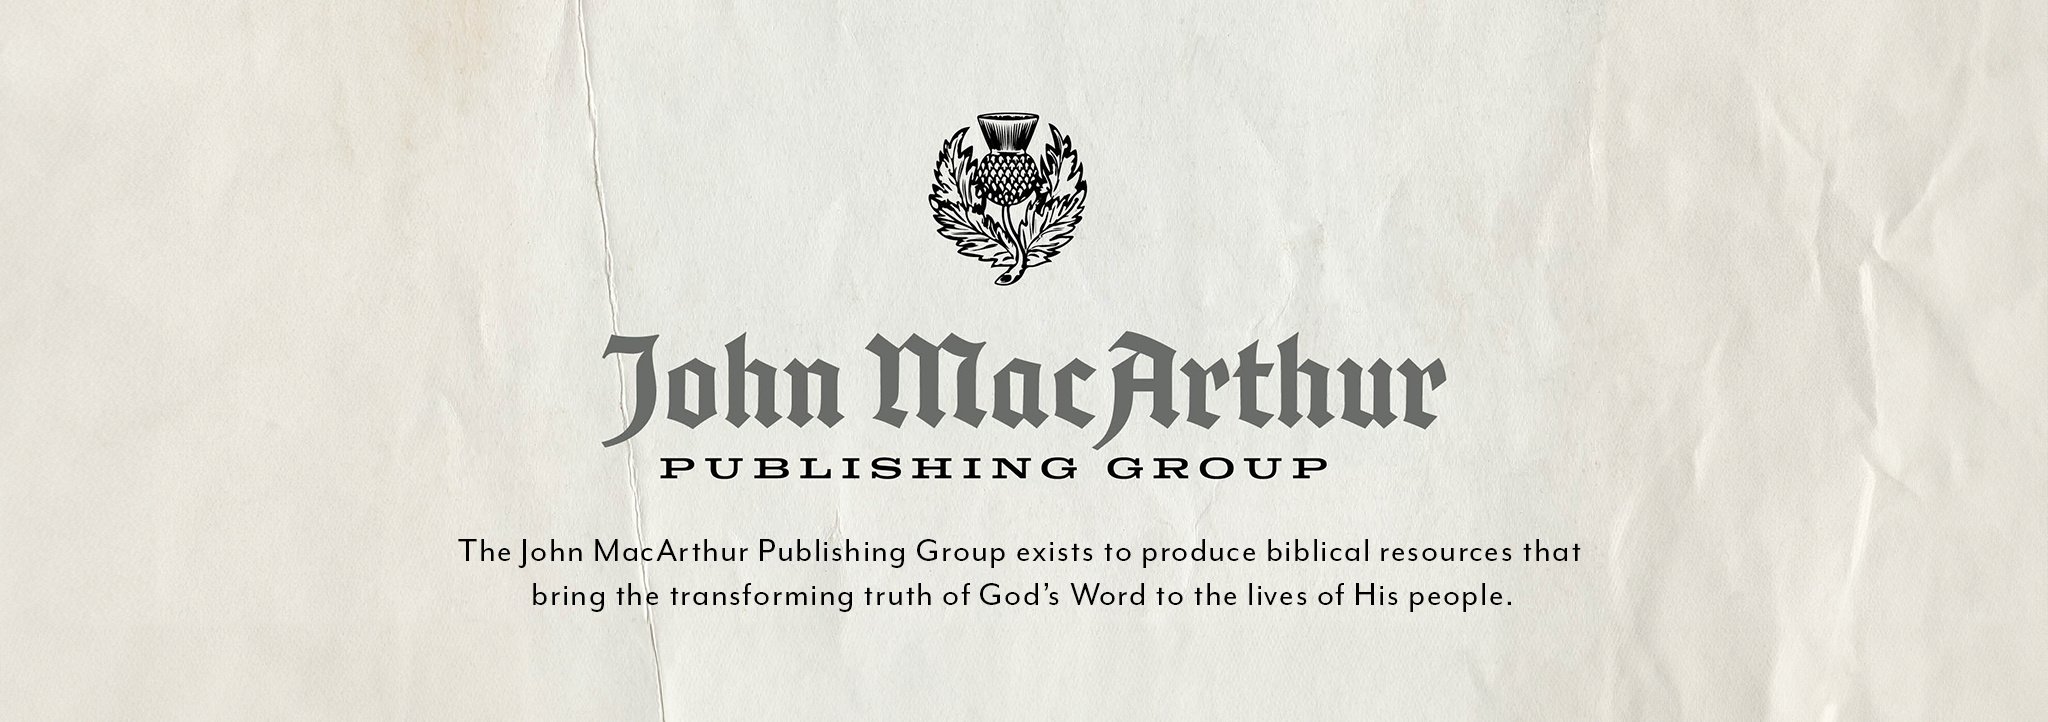 John MacArthur Publishing Group